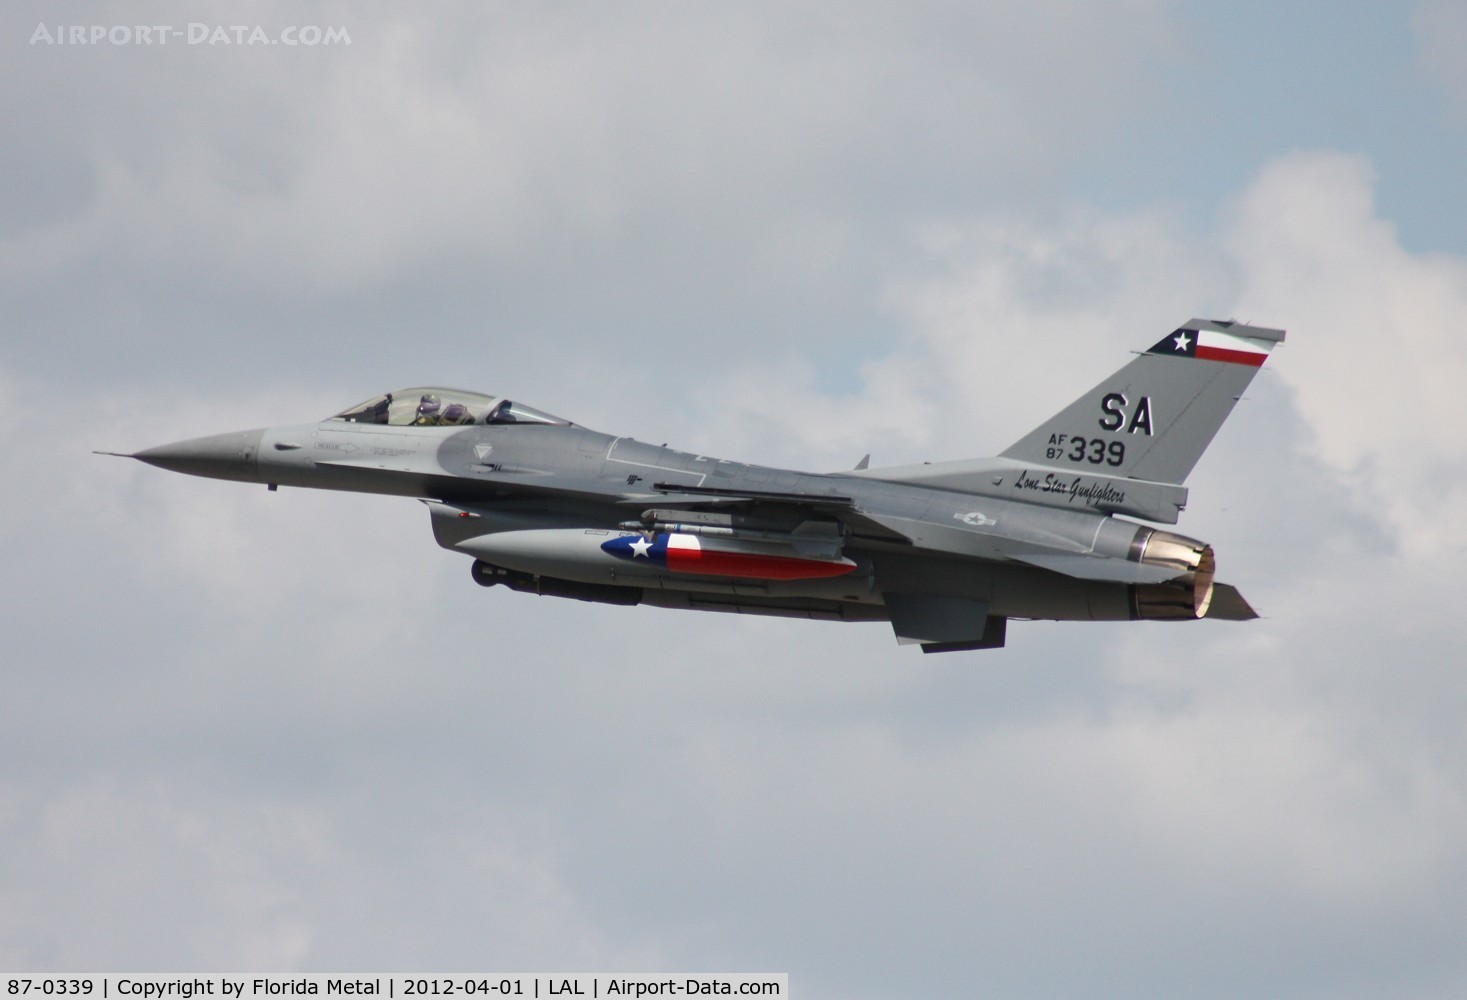 87-0339, 1987 General Dynamics F-16C Fighting Falcon C/N 5C-600, F-16C